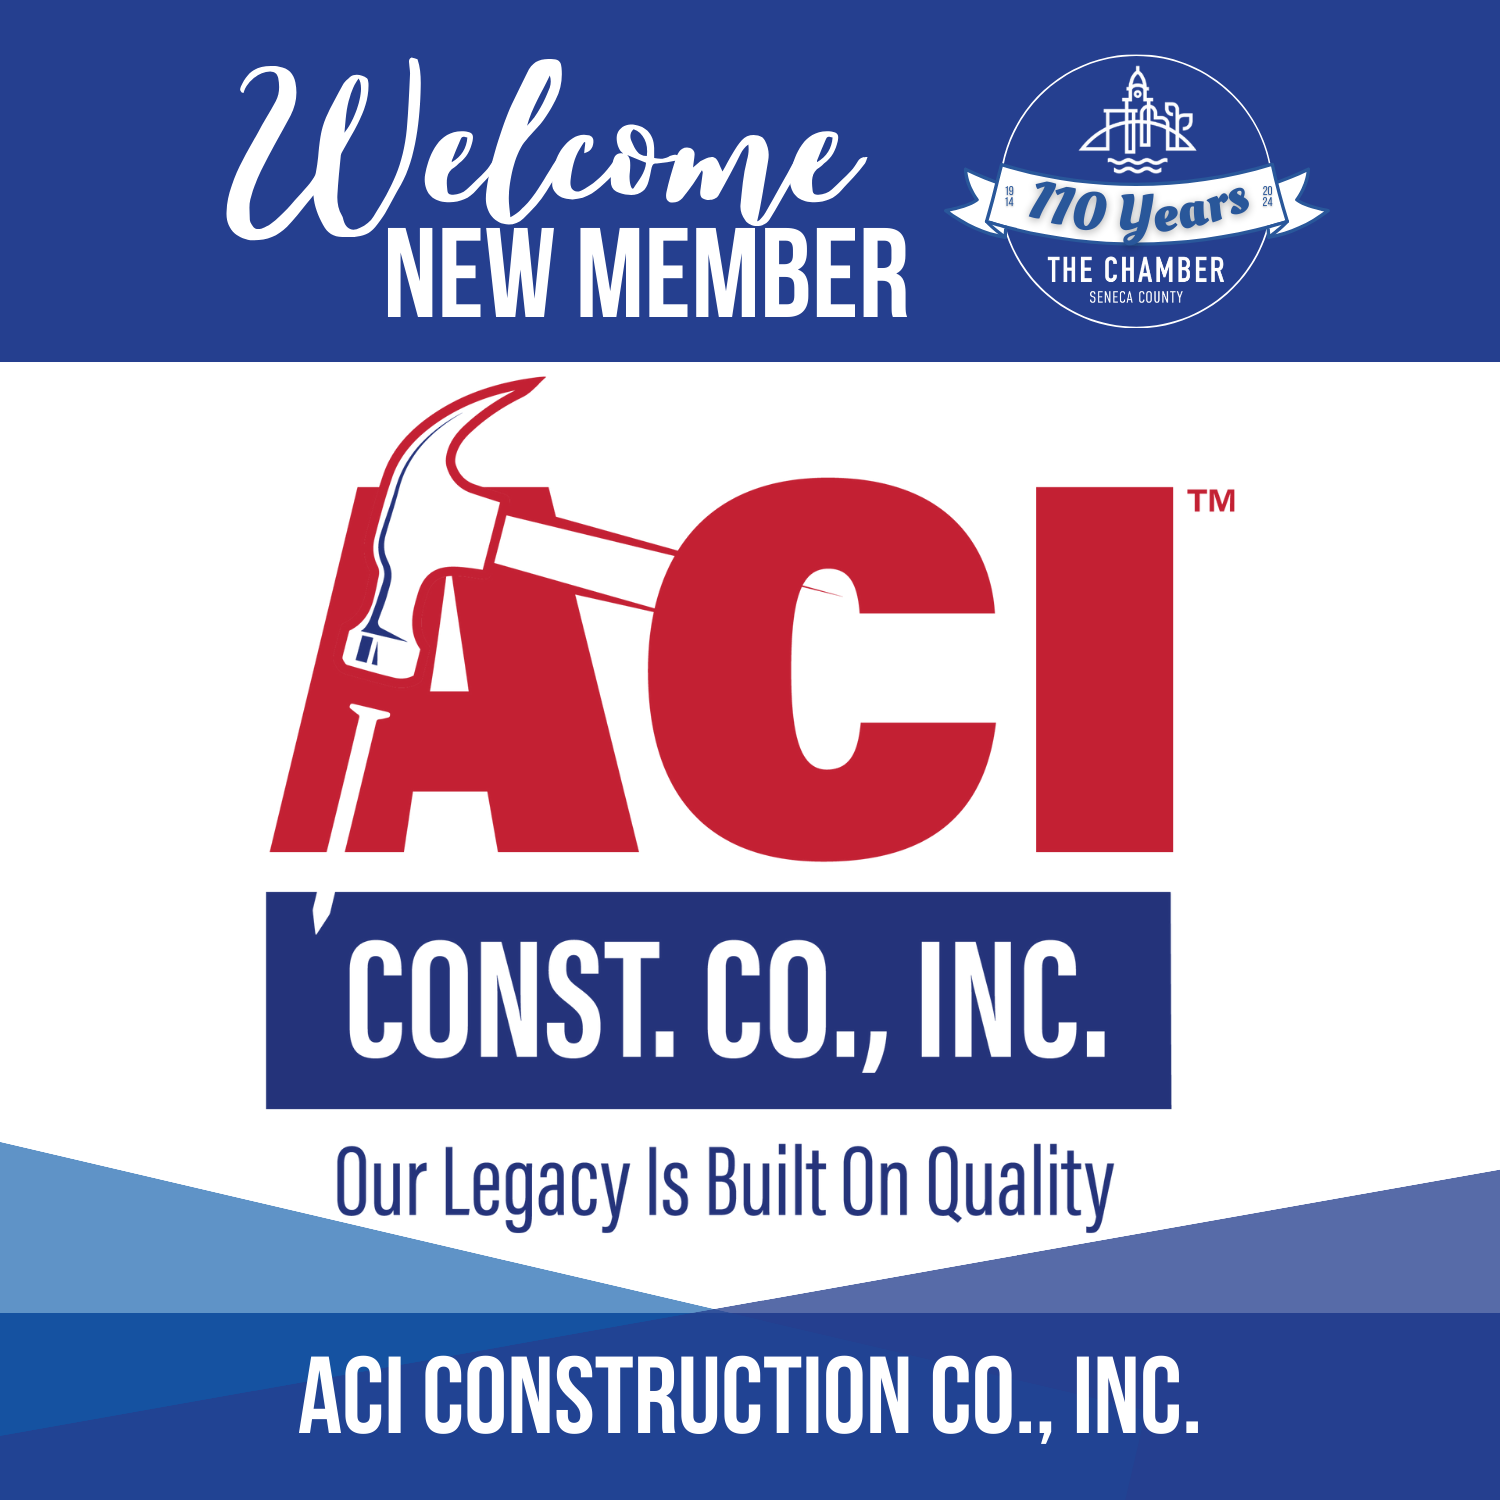 New Member: ACI Construction Co., Inc.